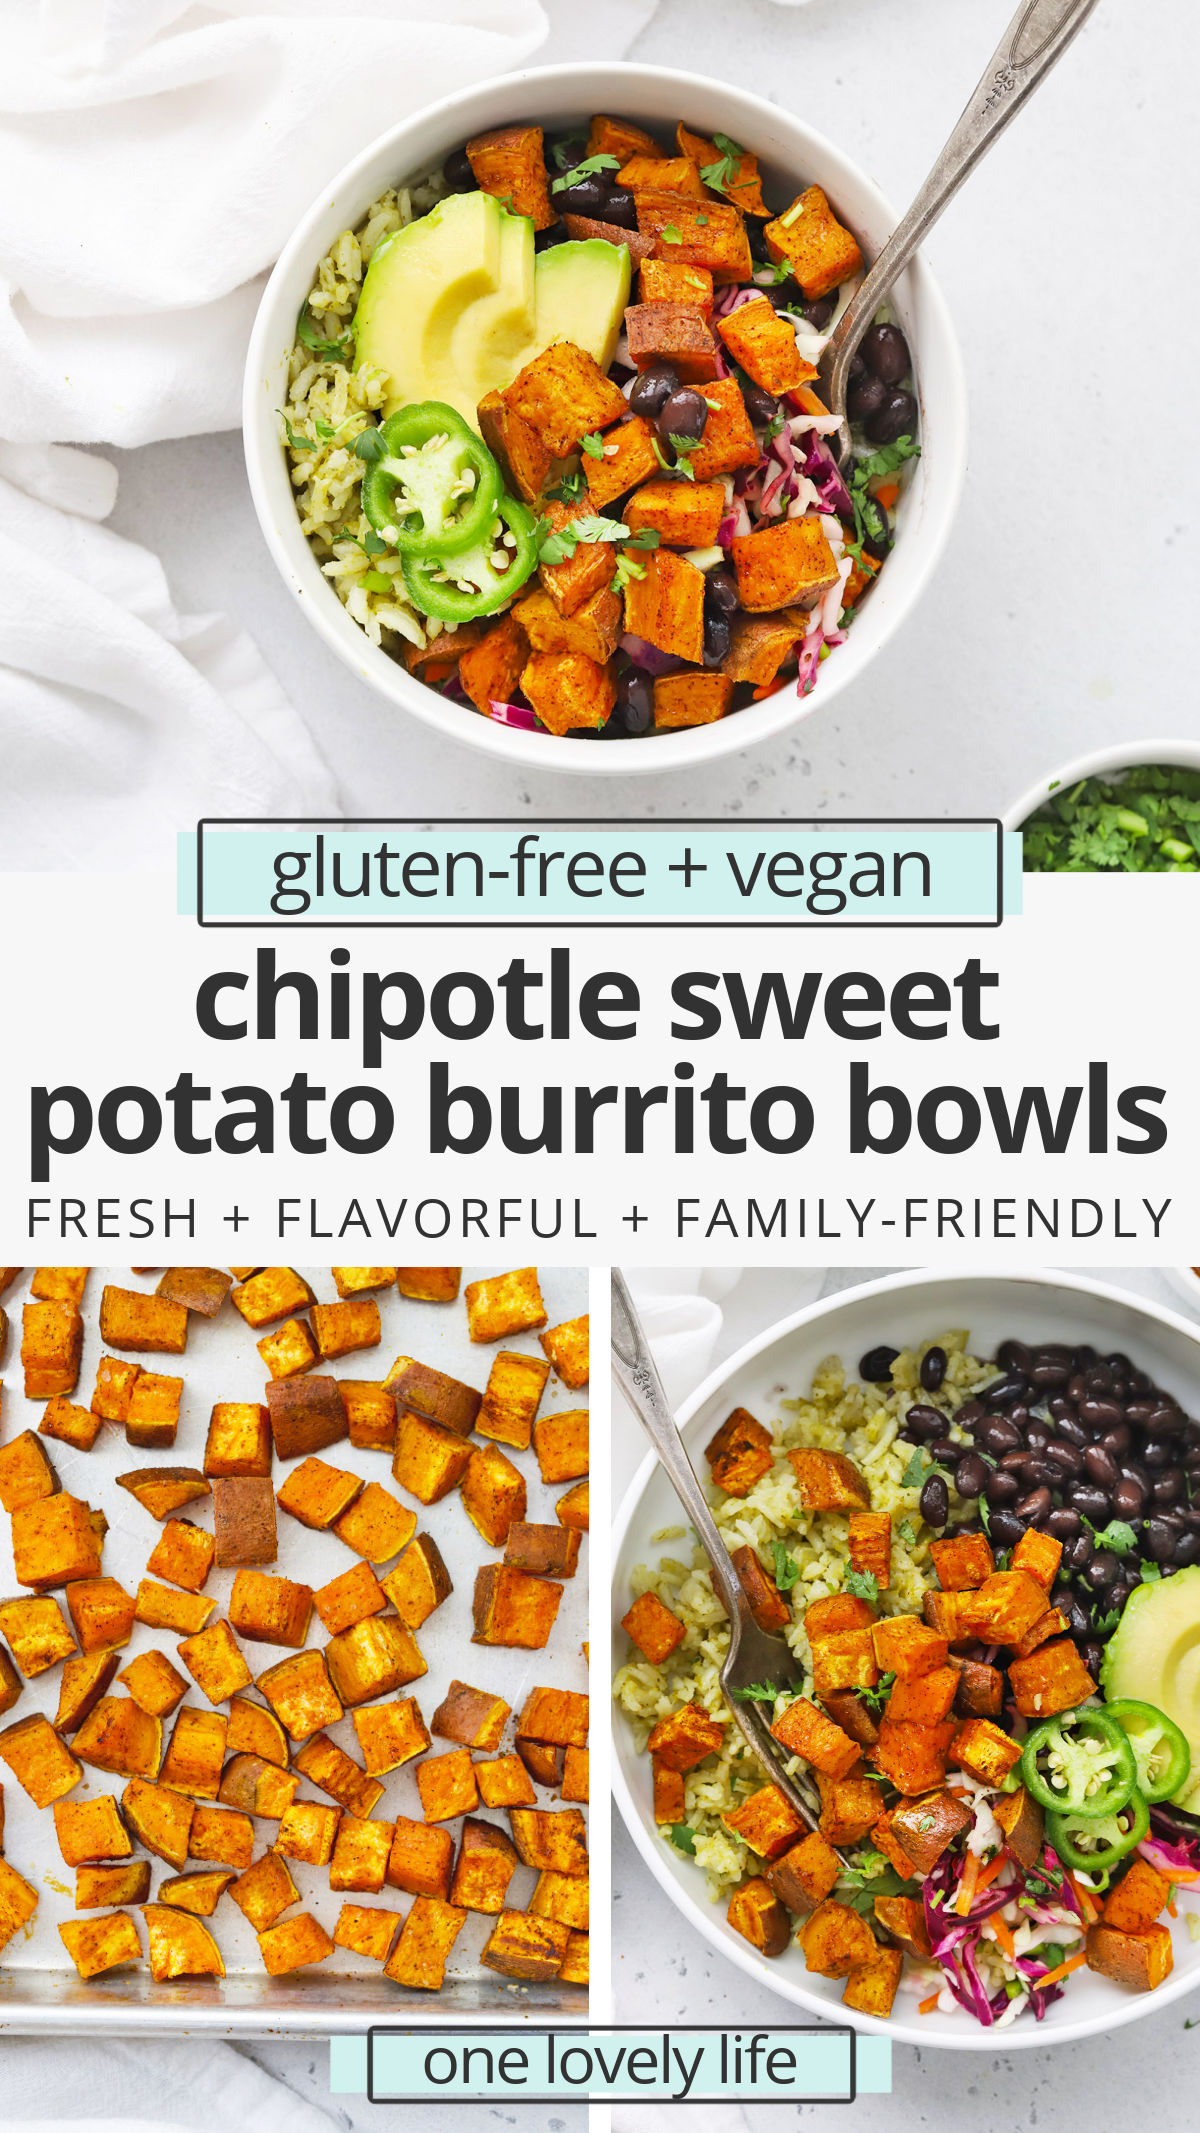 Chipotle Sweet Potato Burrito Bowls - Colorful sweet potato black bean burrito bowls loaded with seasoned roasted chipotle sweet potatoes, black beans, veggies, rice, and more. One of our favorite vegan burrito bowl recipes! (Gluten-Free, Vegan) // burrito bowl // roasted sweet potatoes // vegan burrito bowl // vegan dinner // healthy dinner #glutenfree #vegan #texmex #burritobowl #burrito